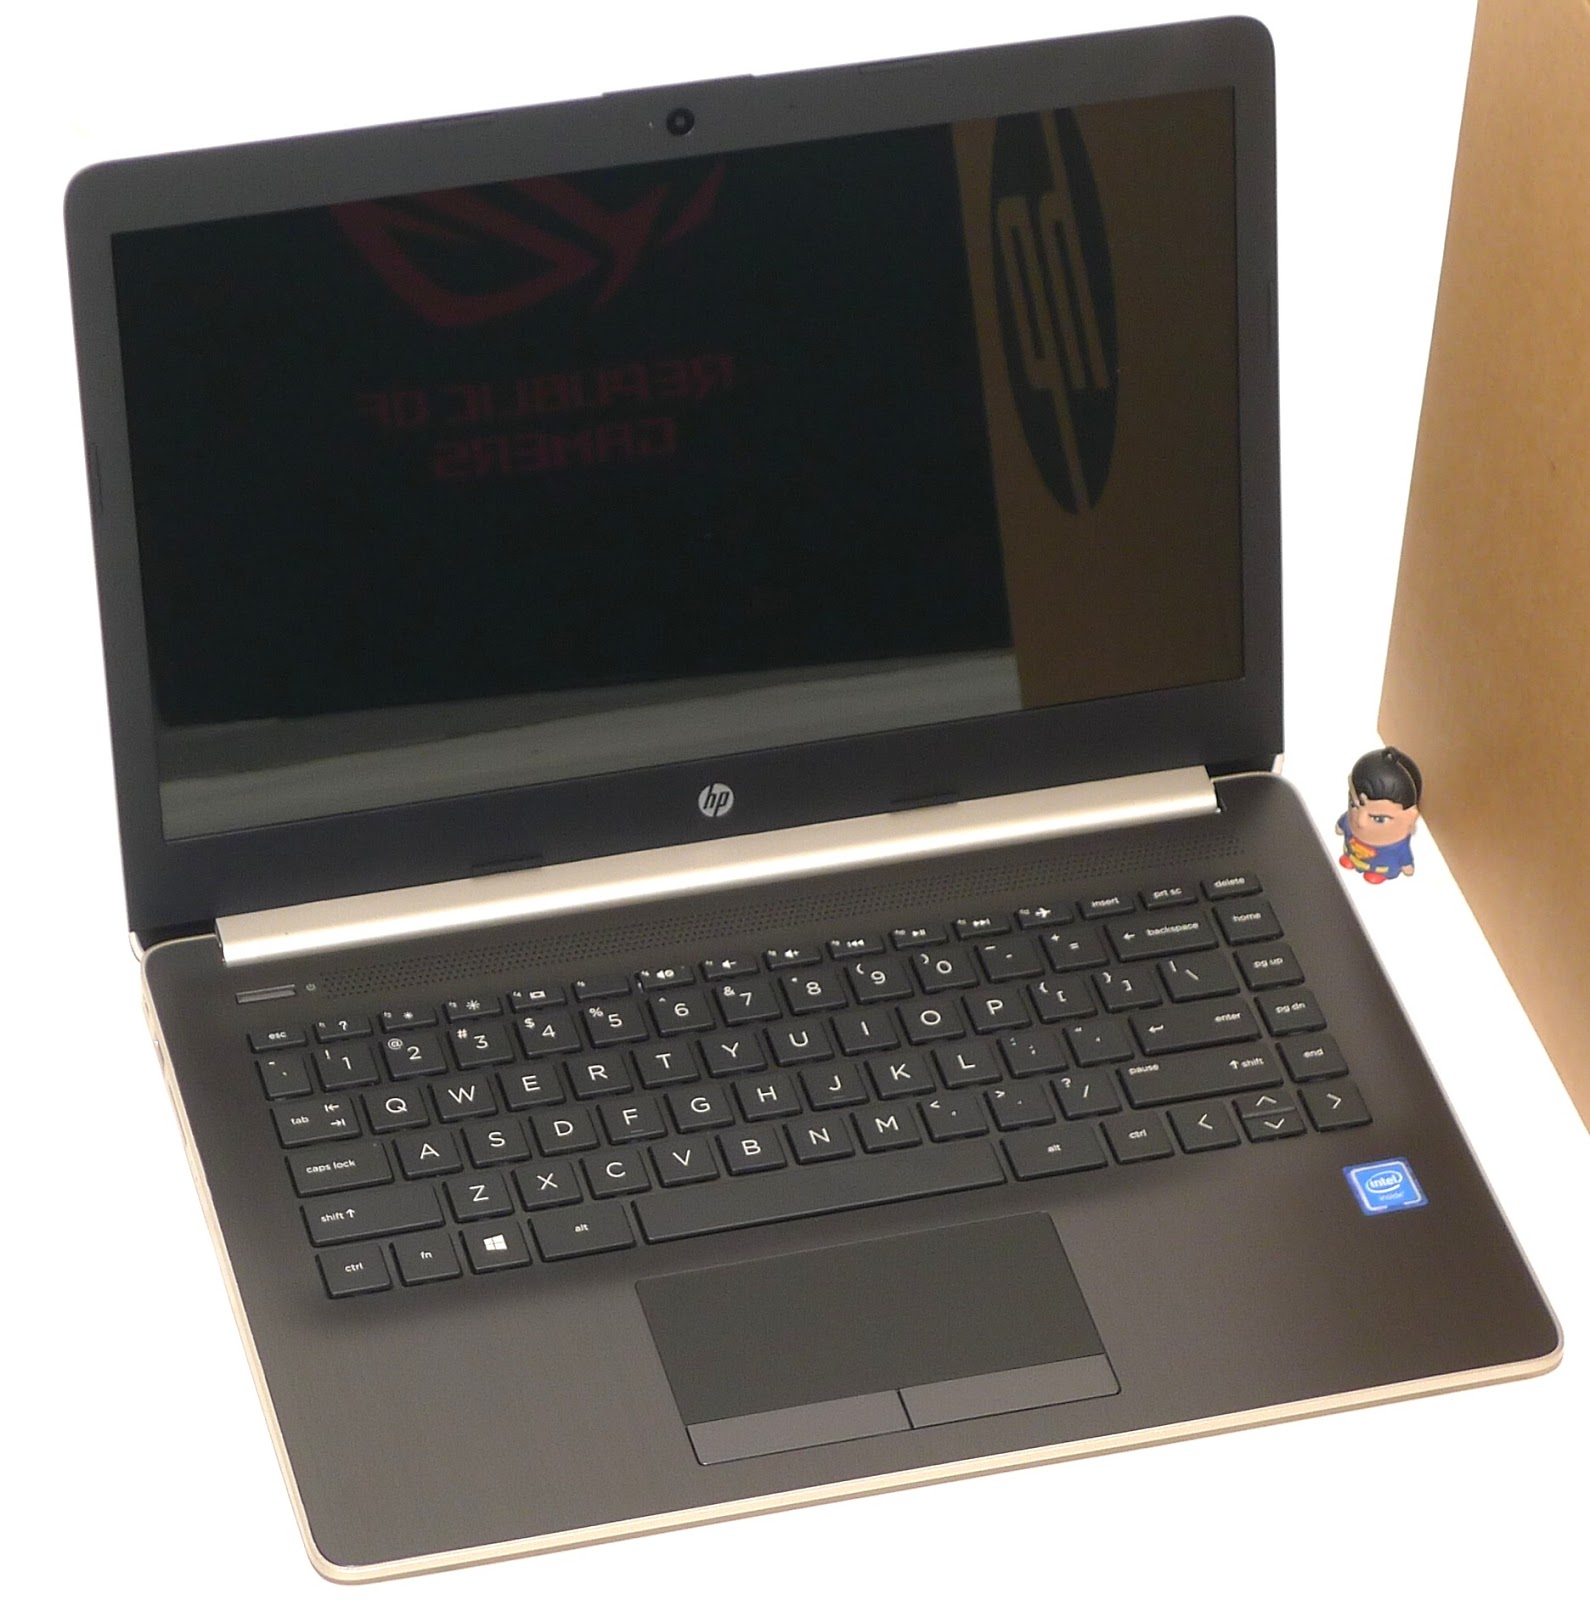  Jual  Laptop Baru HP  14 ck0011TU Gold di Malang Jual  Beli  